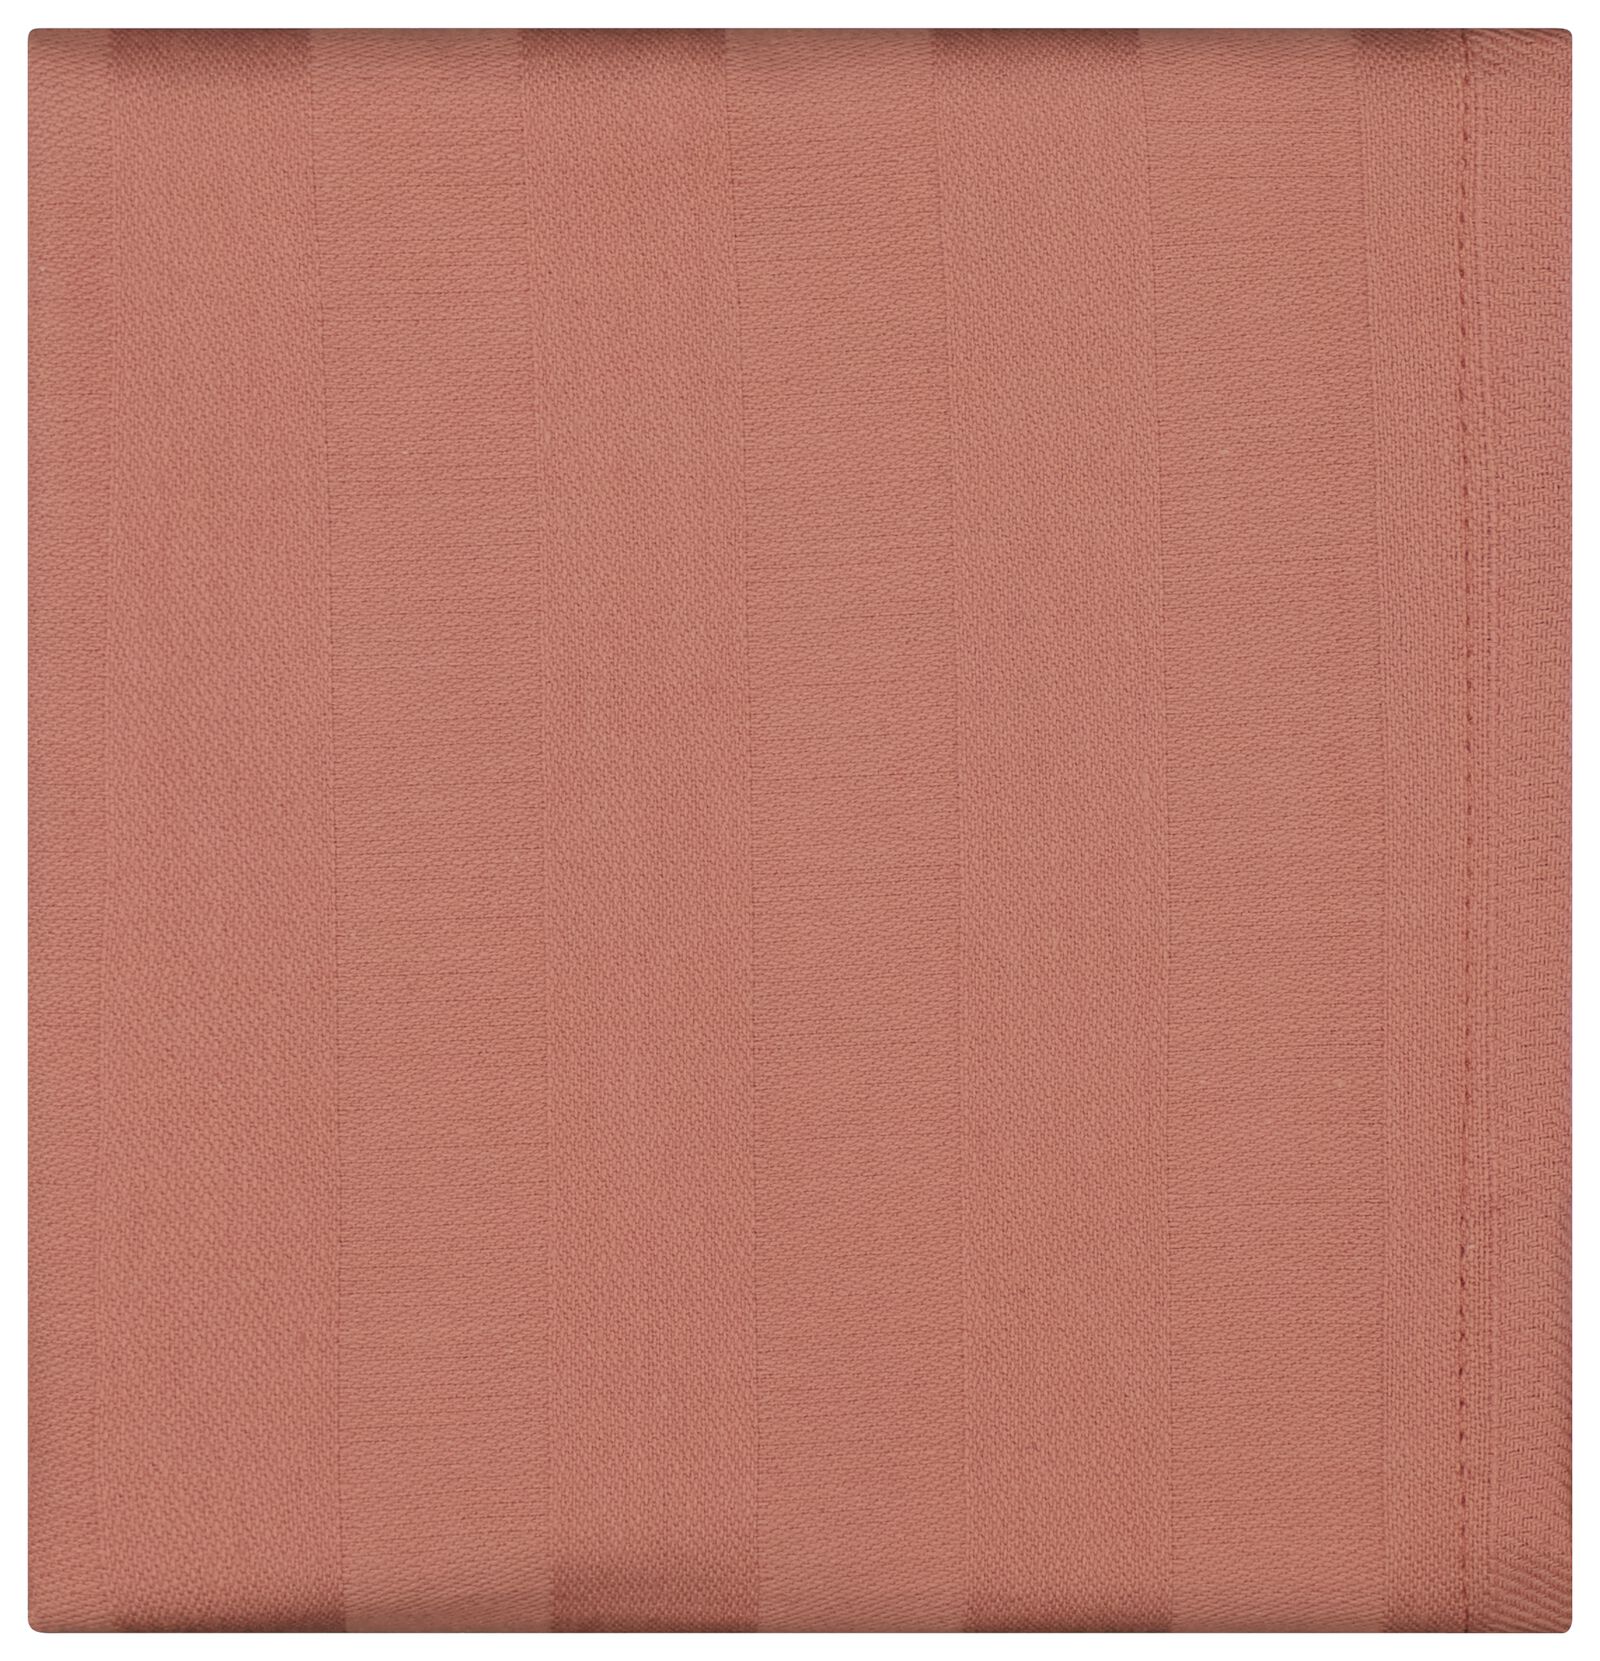 Geschirrtuch, 65 x 65 cm, Baumwolle, rosa - 5420094 - HEMA